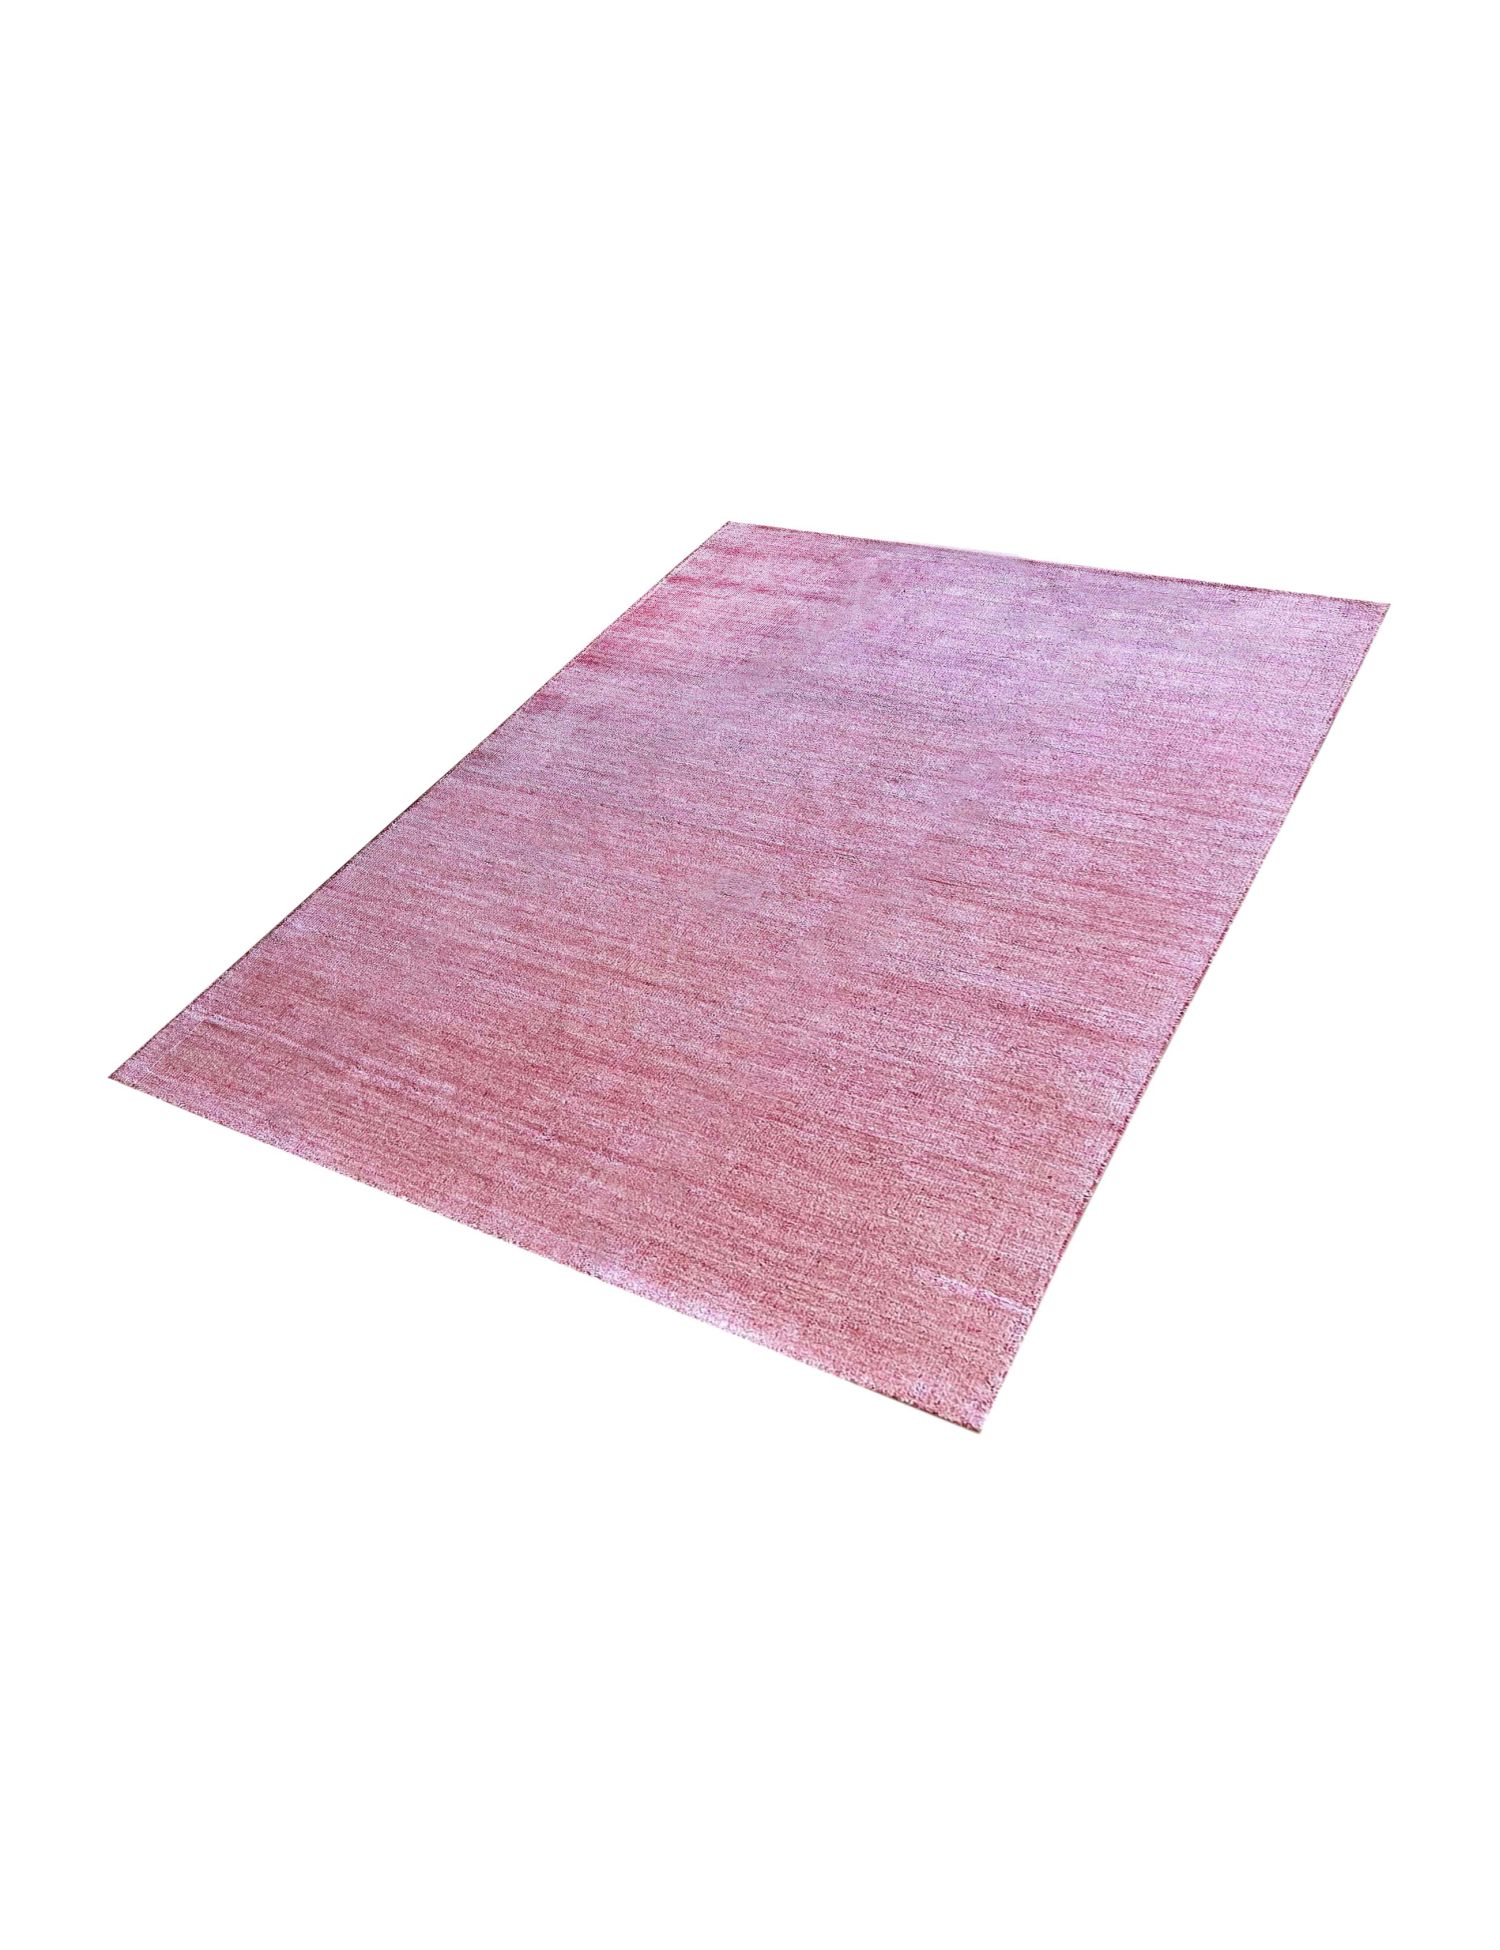 Bamboo Χαλί  Ροζ <br/>240 x 170 cm